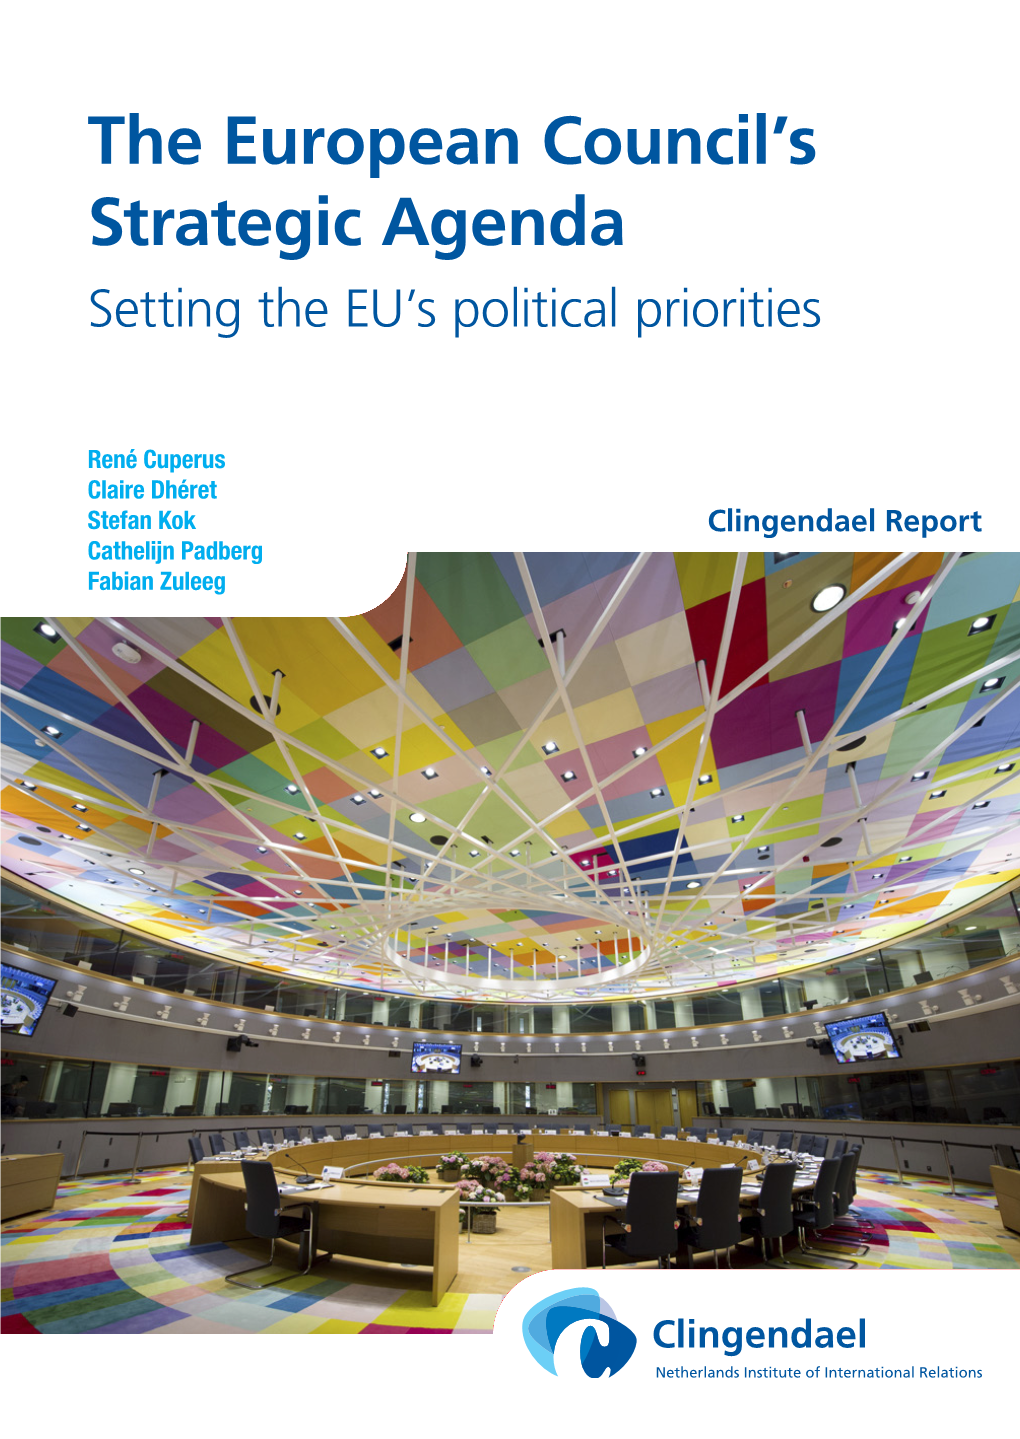 The European Council's Strategic Agenda